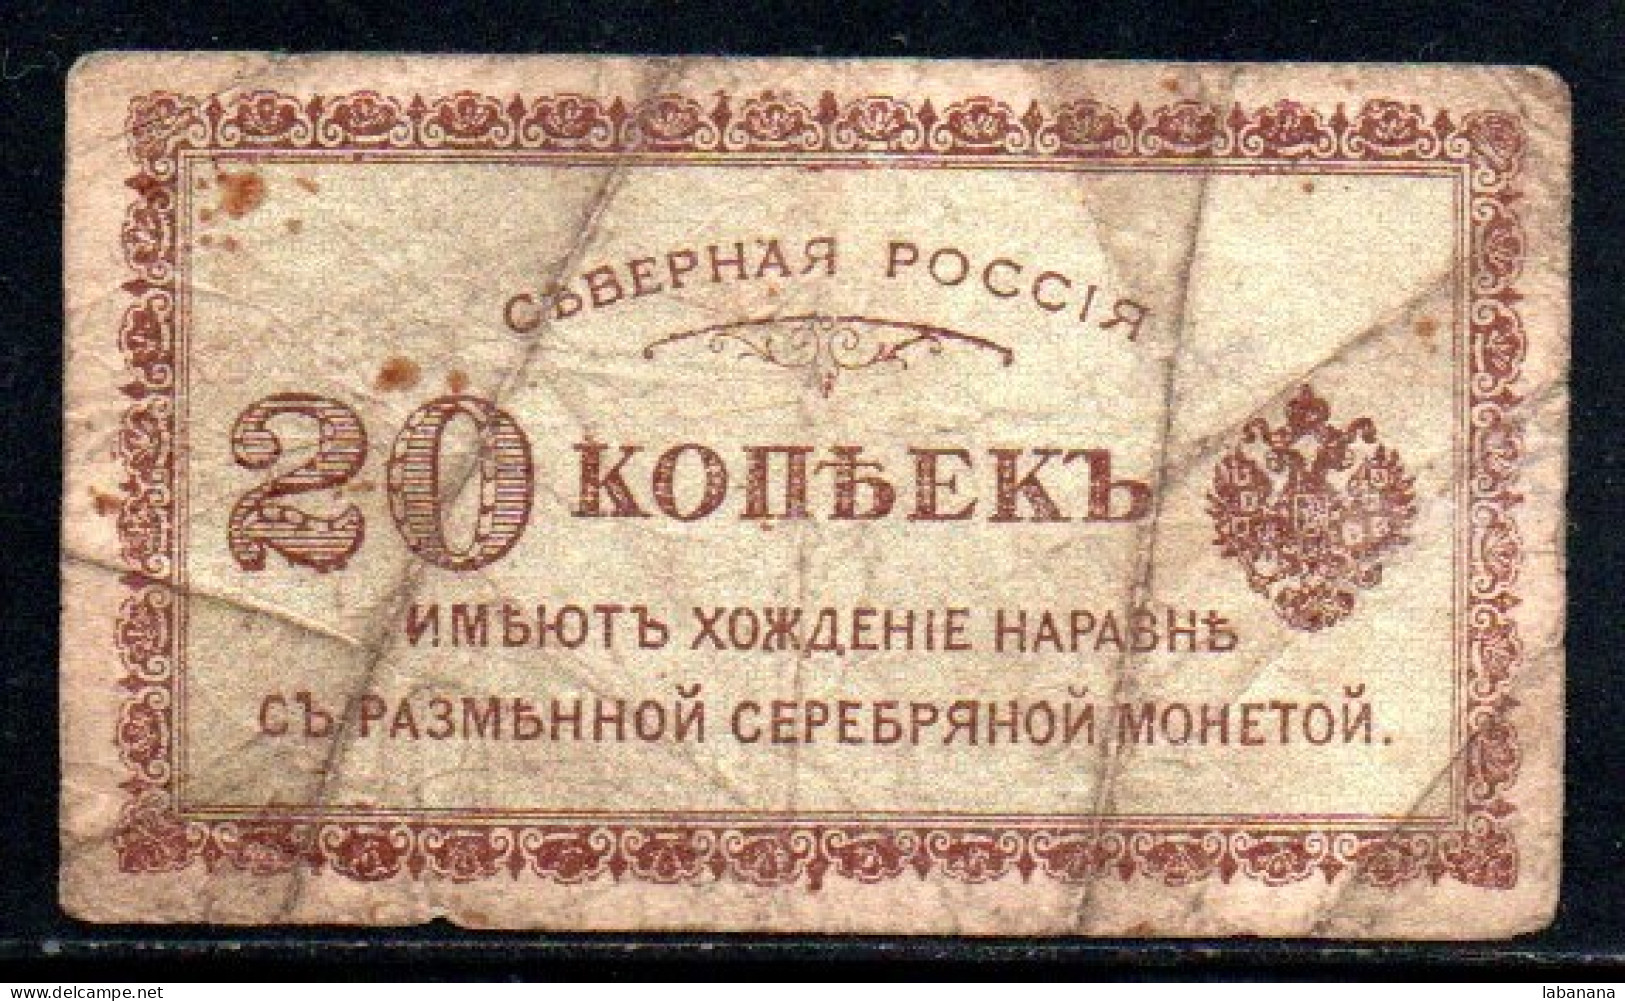 276-Russie Du Nord 20 Kopecks 1919 - Russia